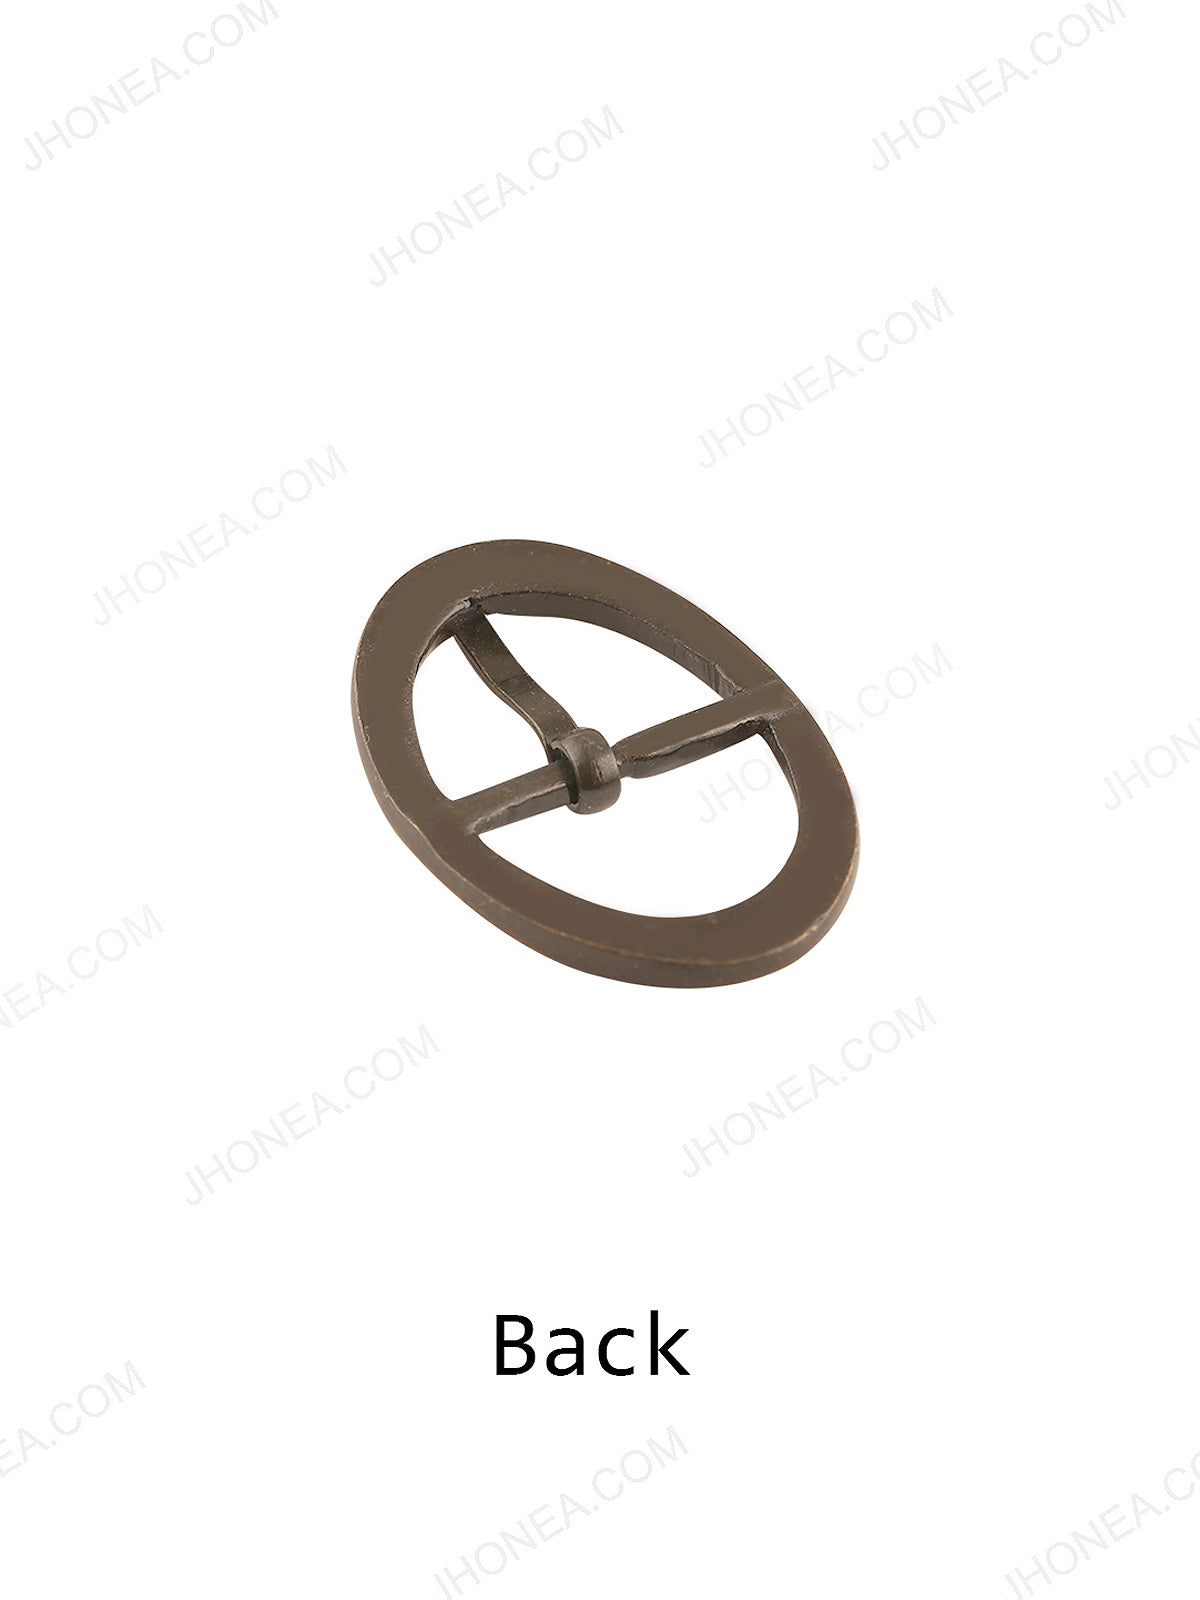 Shiny Antique Brass Western Style Oval Shape Belt Buckle